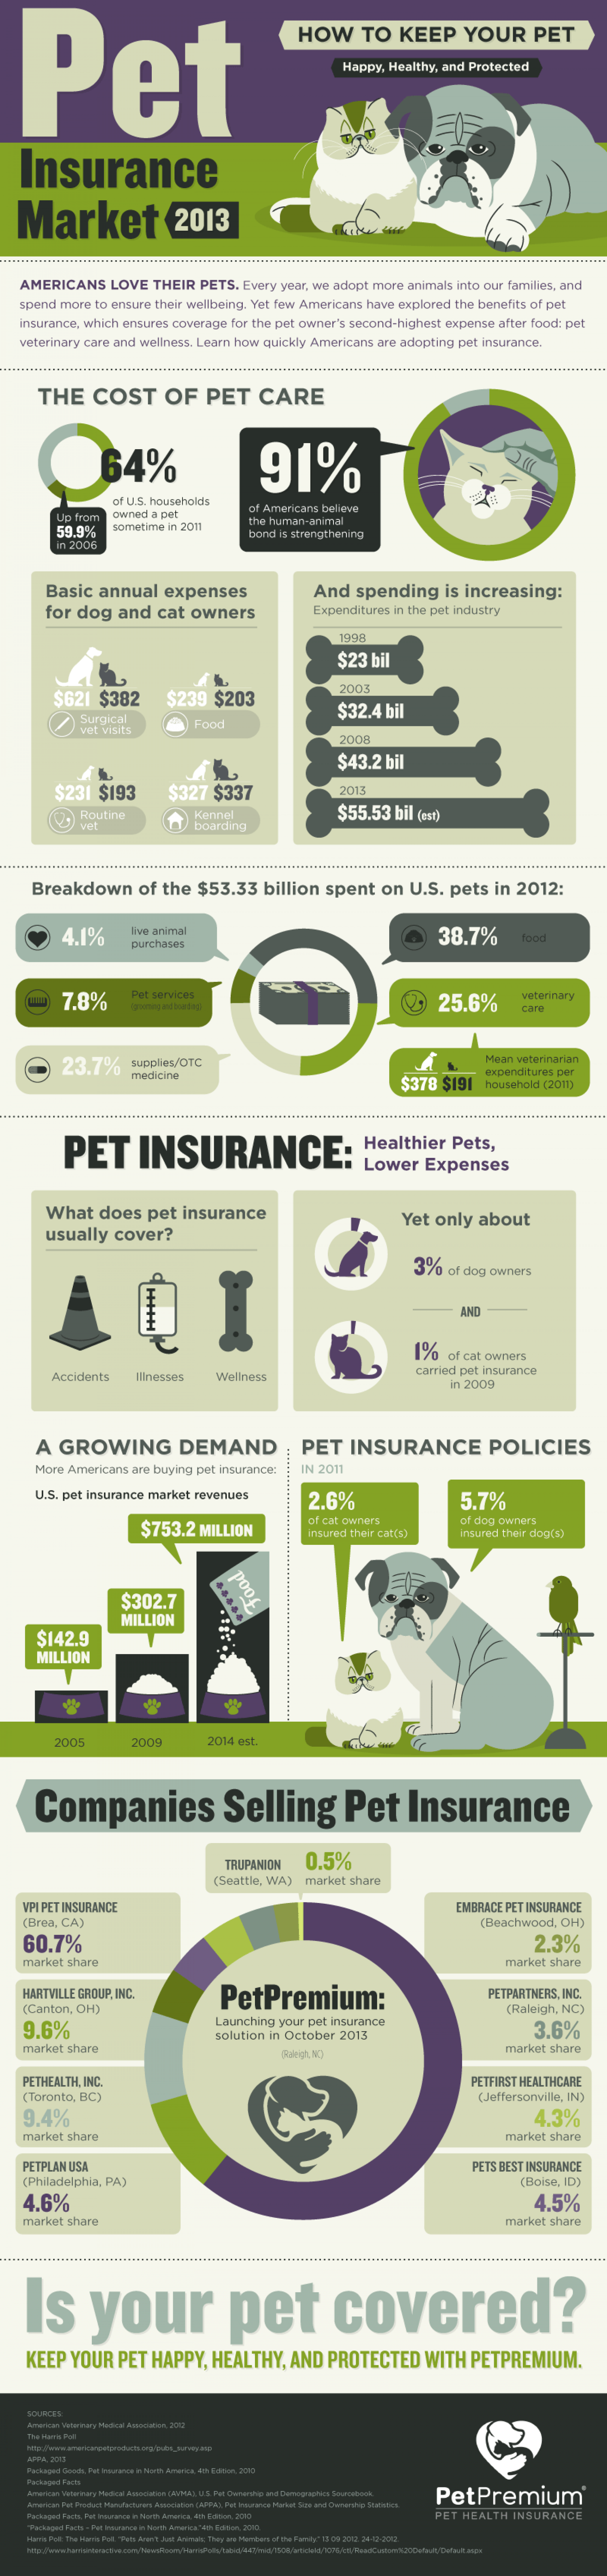 Pet Insurance Market 2013 Infographic